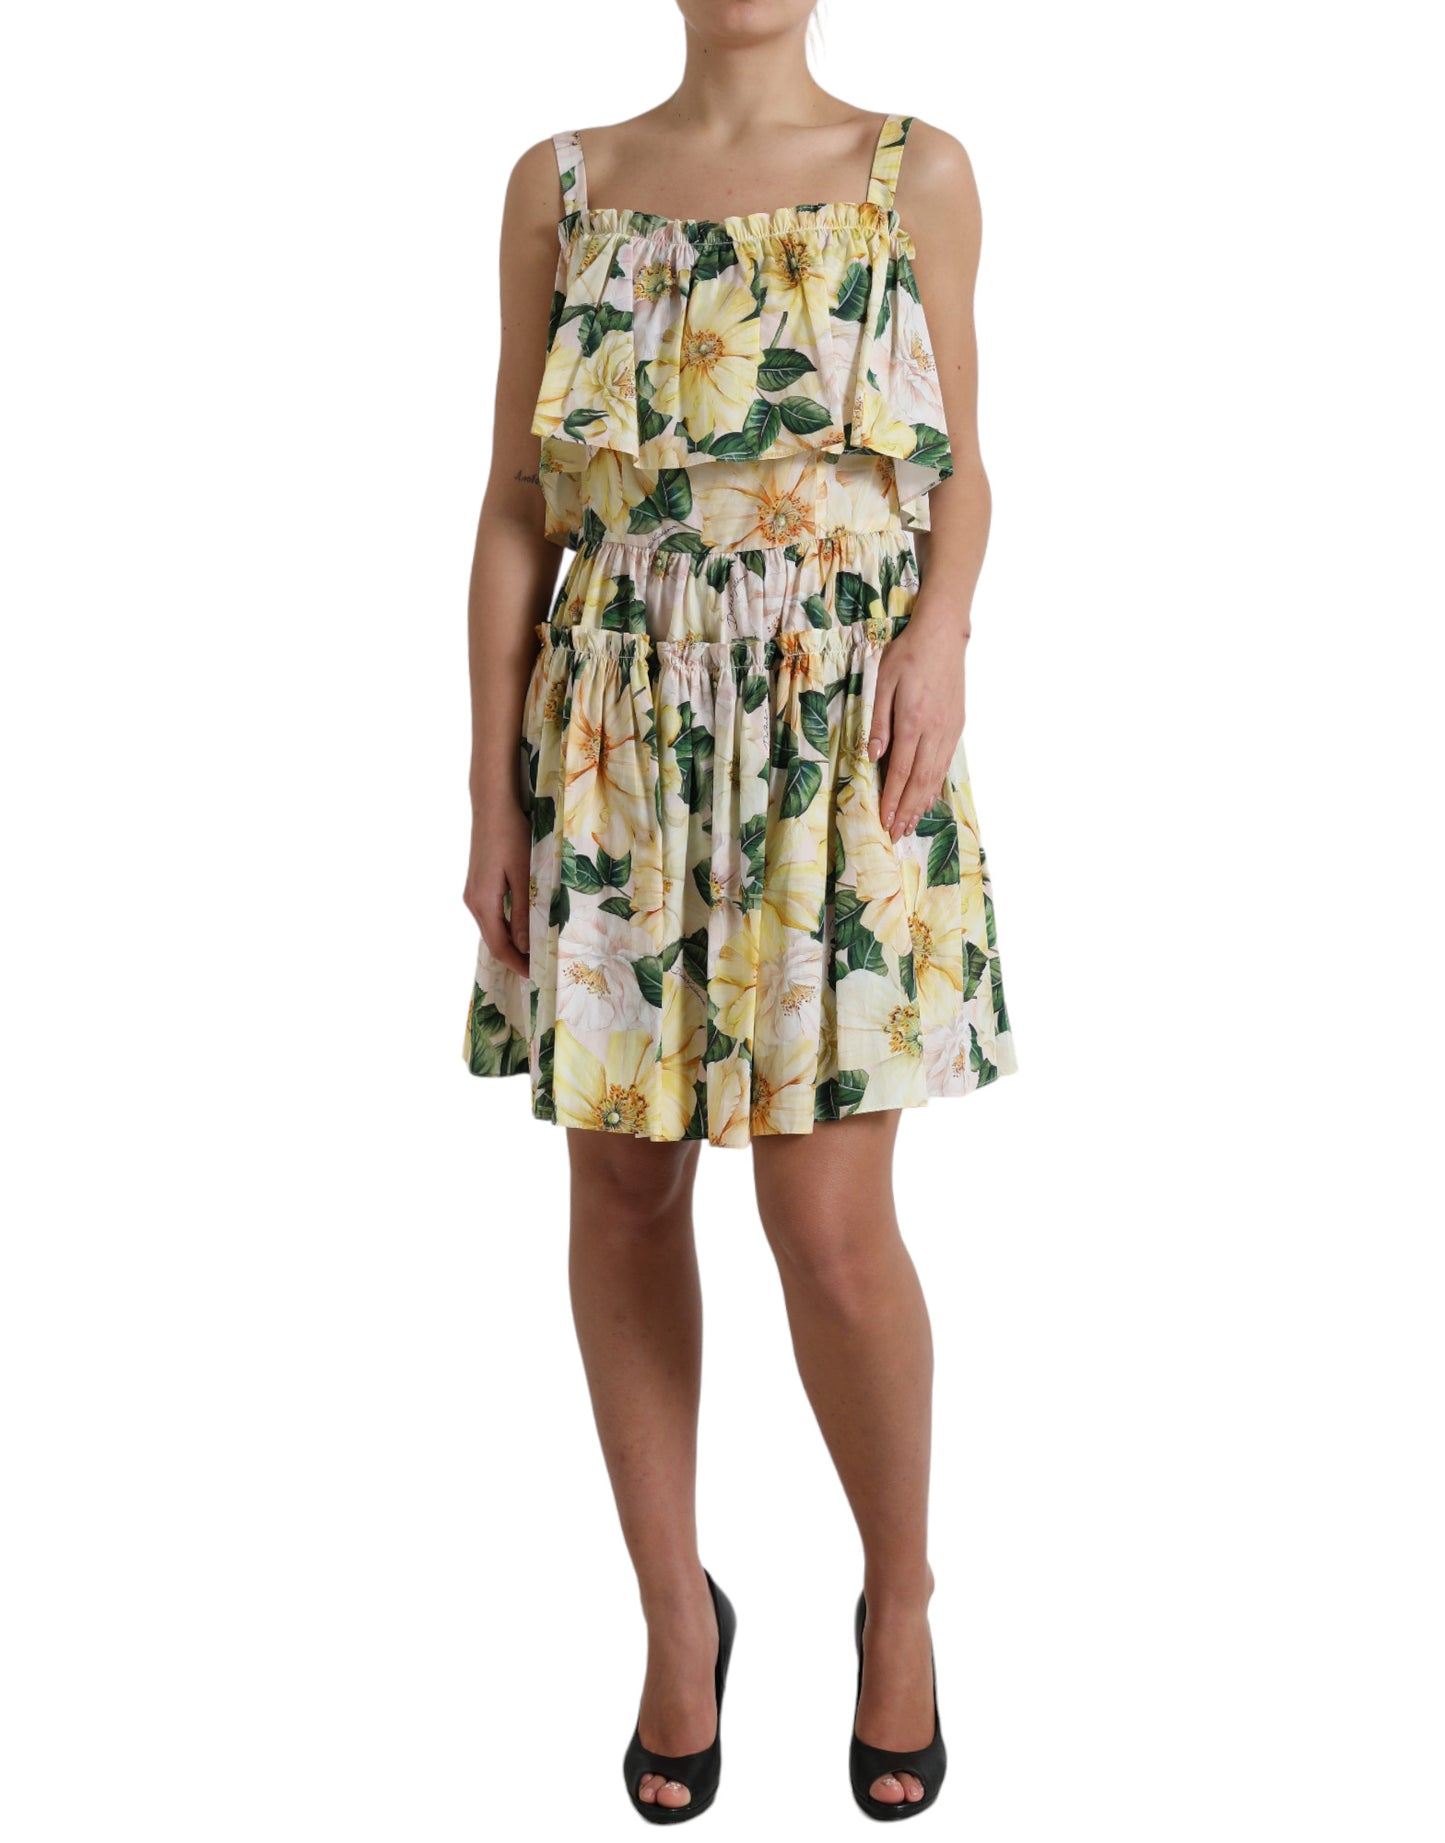 Chic Cold-Shoulder Floral Mini Dress